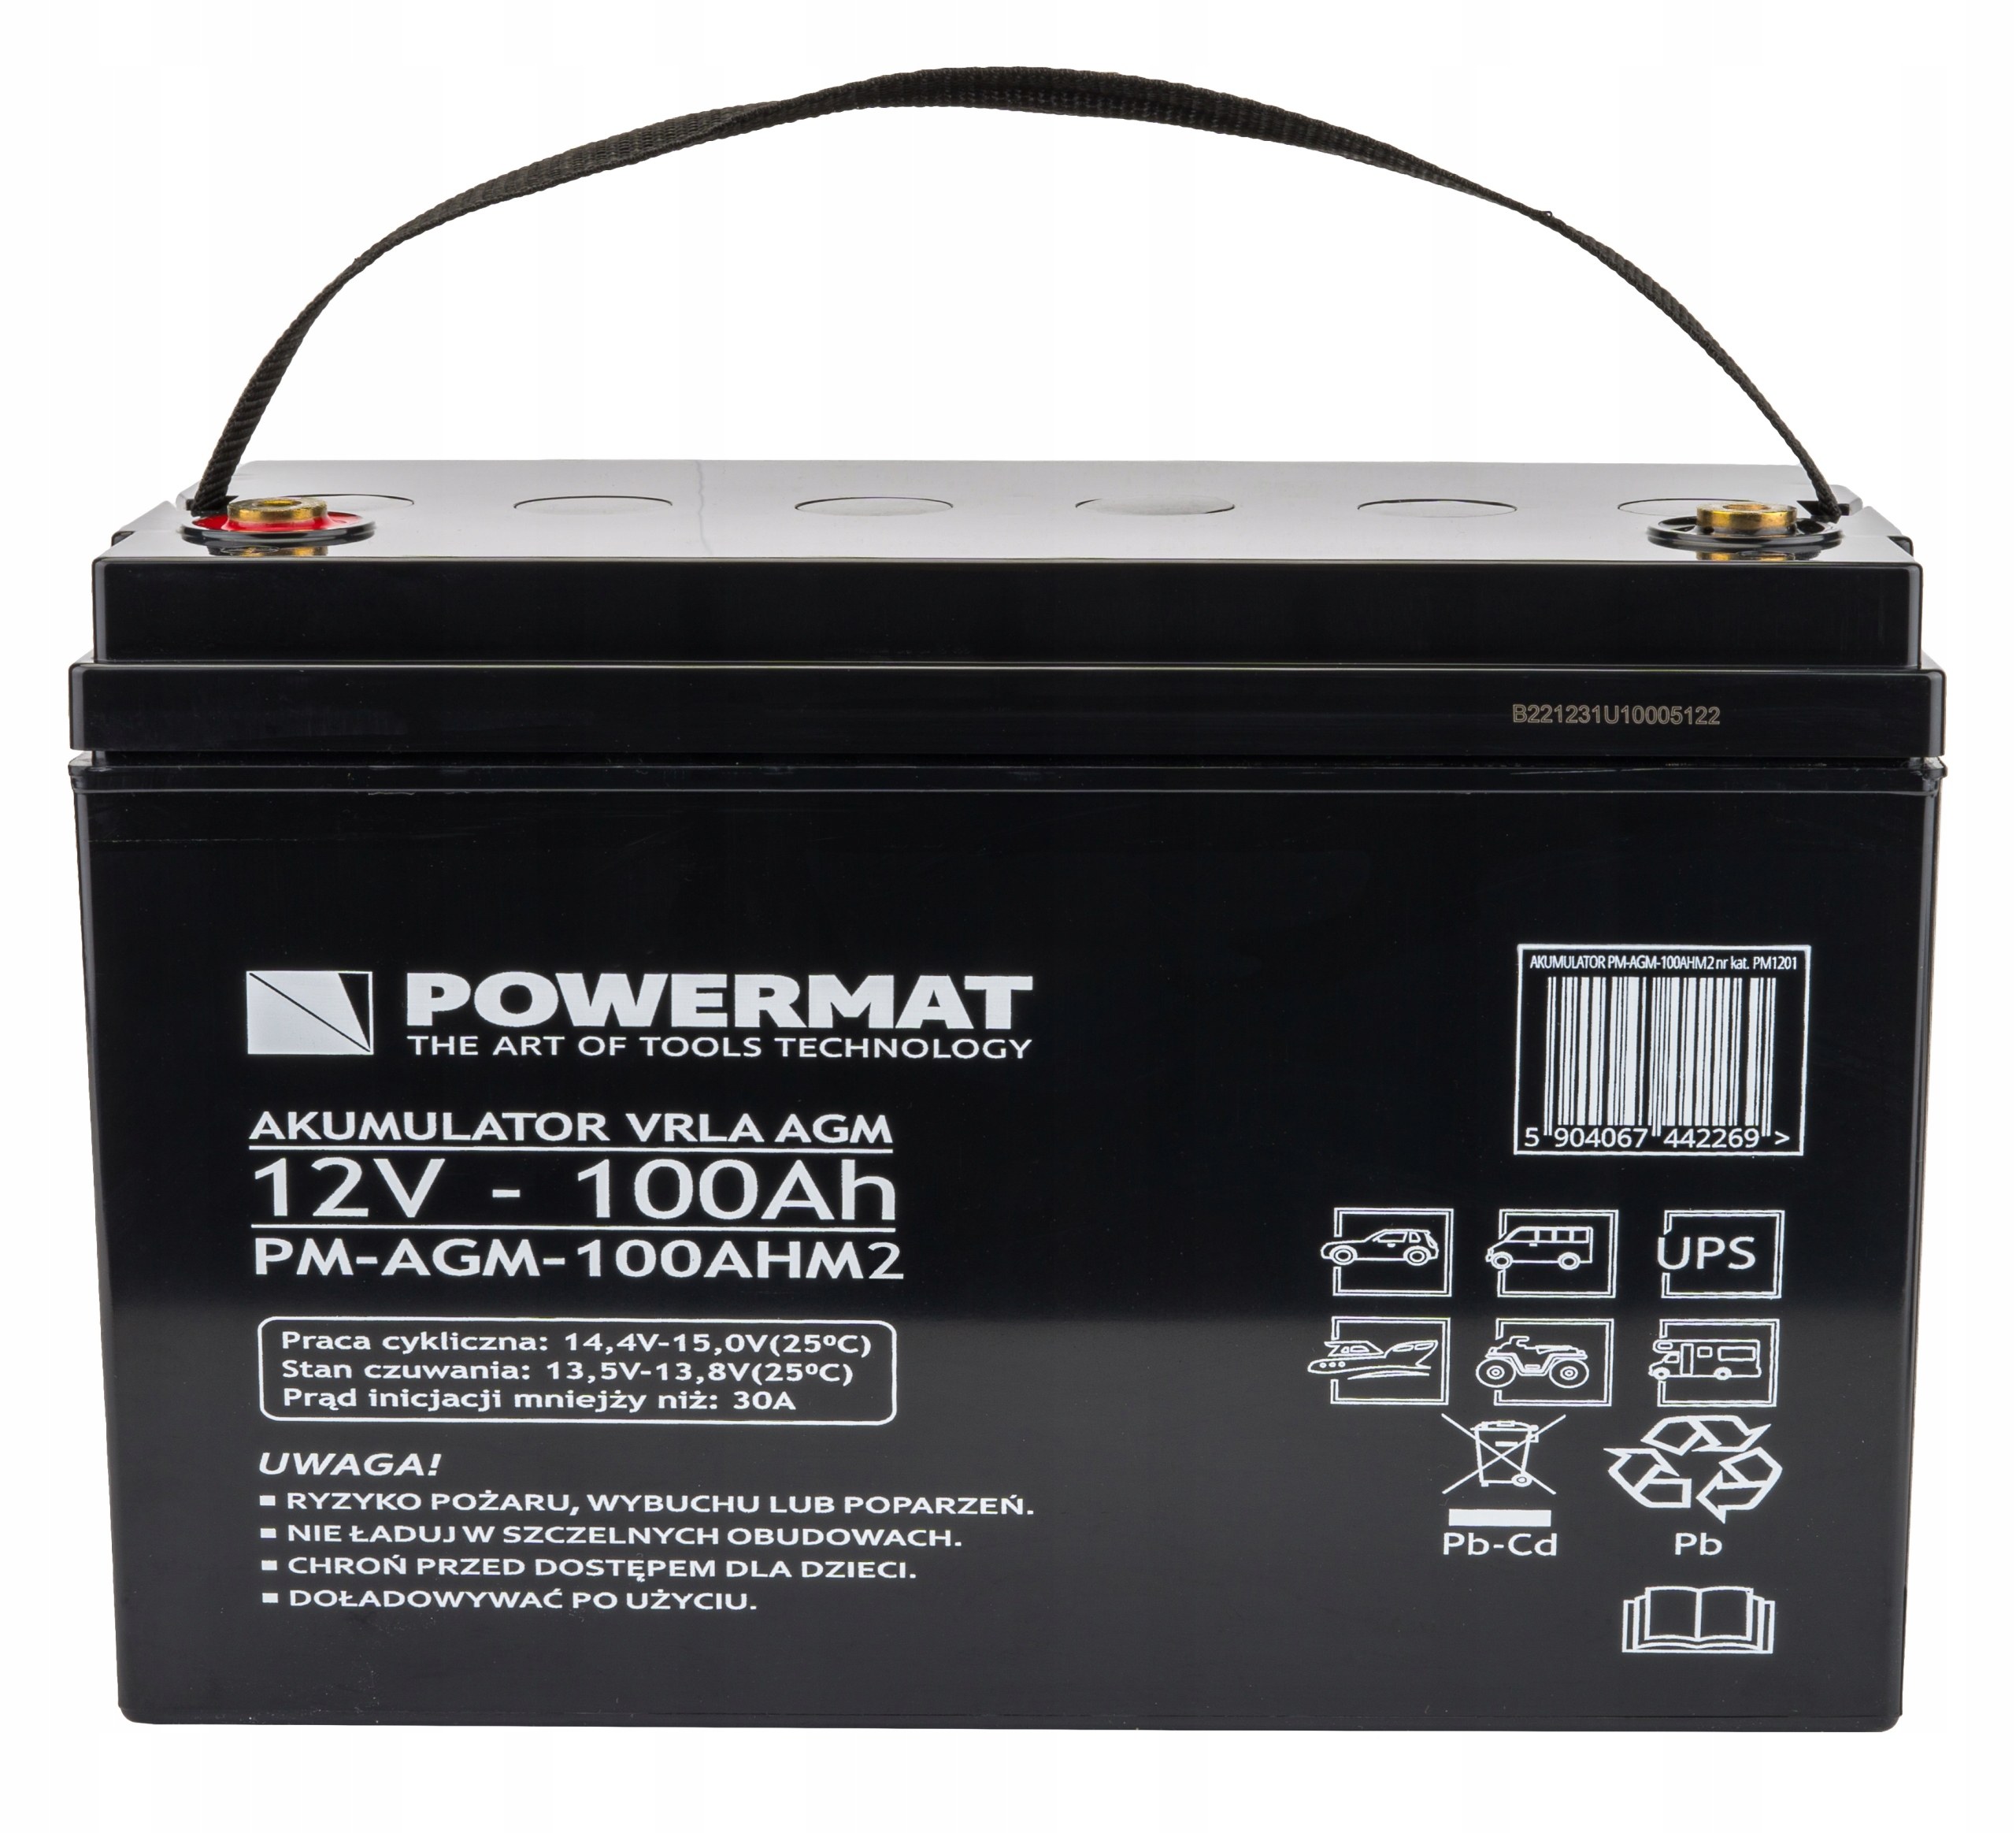 Akumulator VRLA AGM 12V 100Ah Bateria do UPS C20 Pojemność 100 Ah